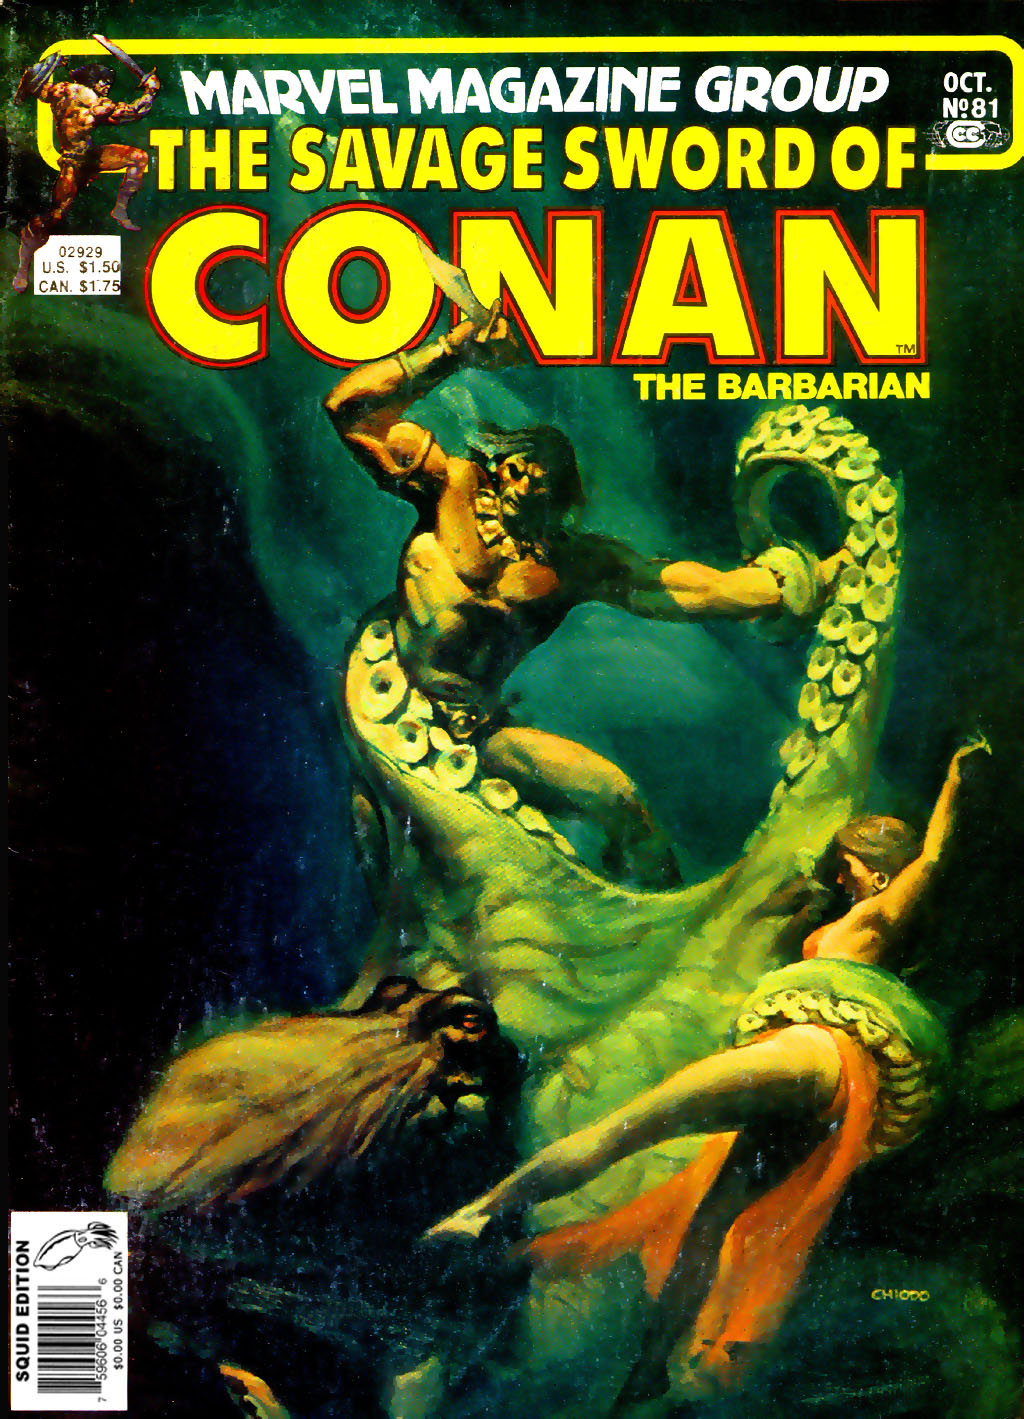 The Savage Sword Of Conan 81 Page 1